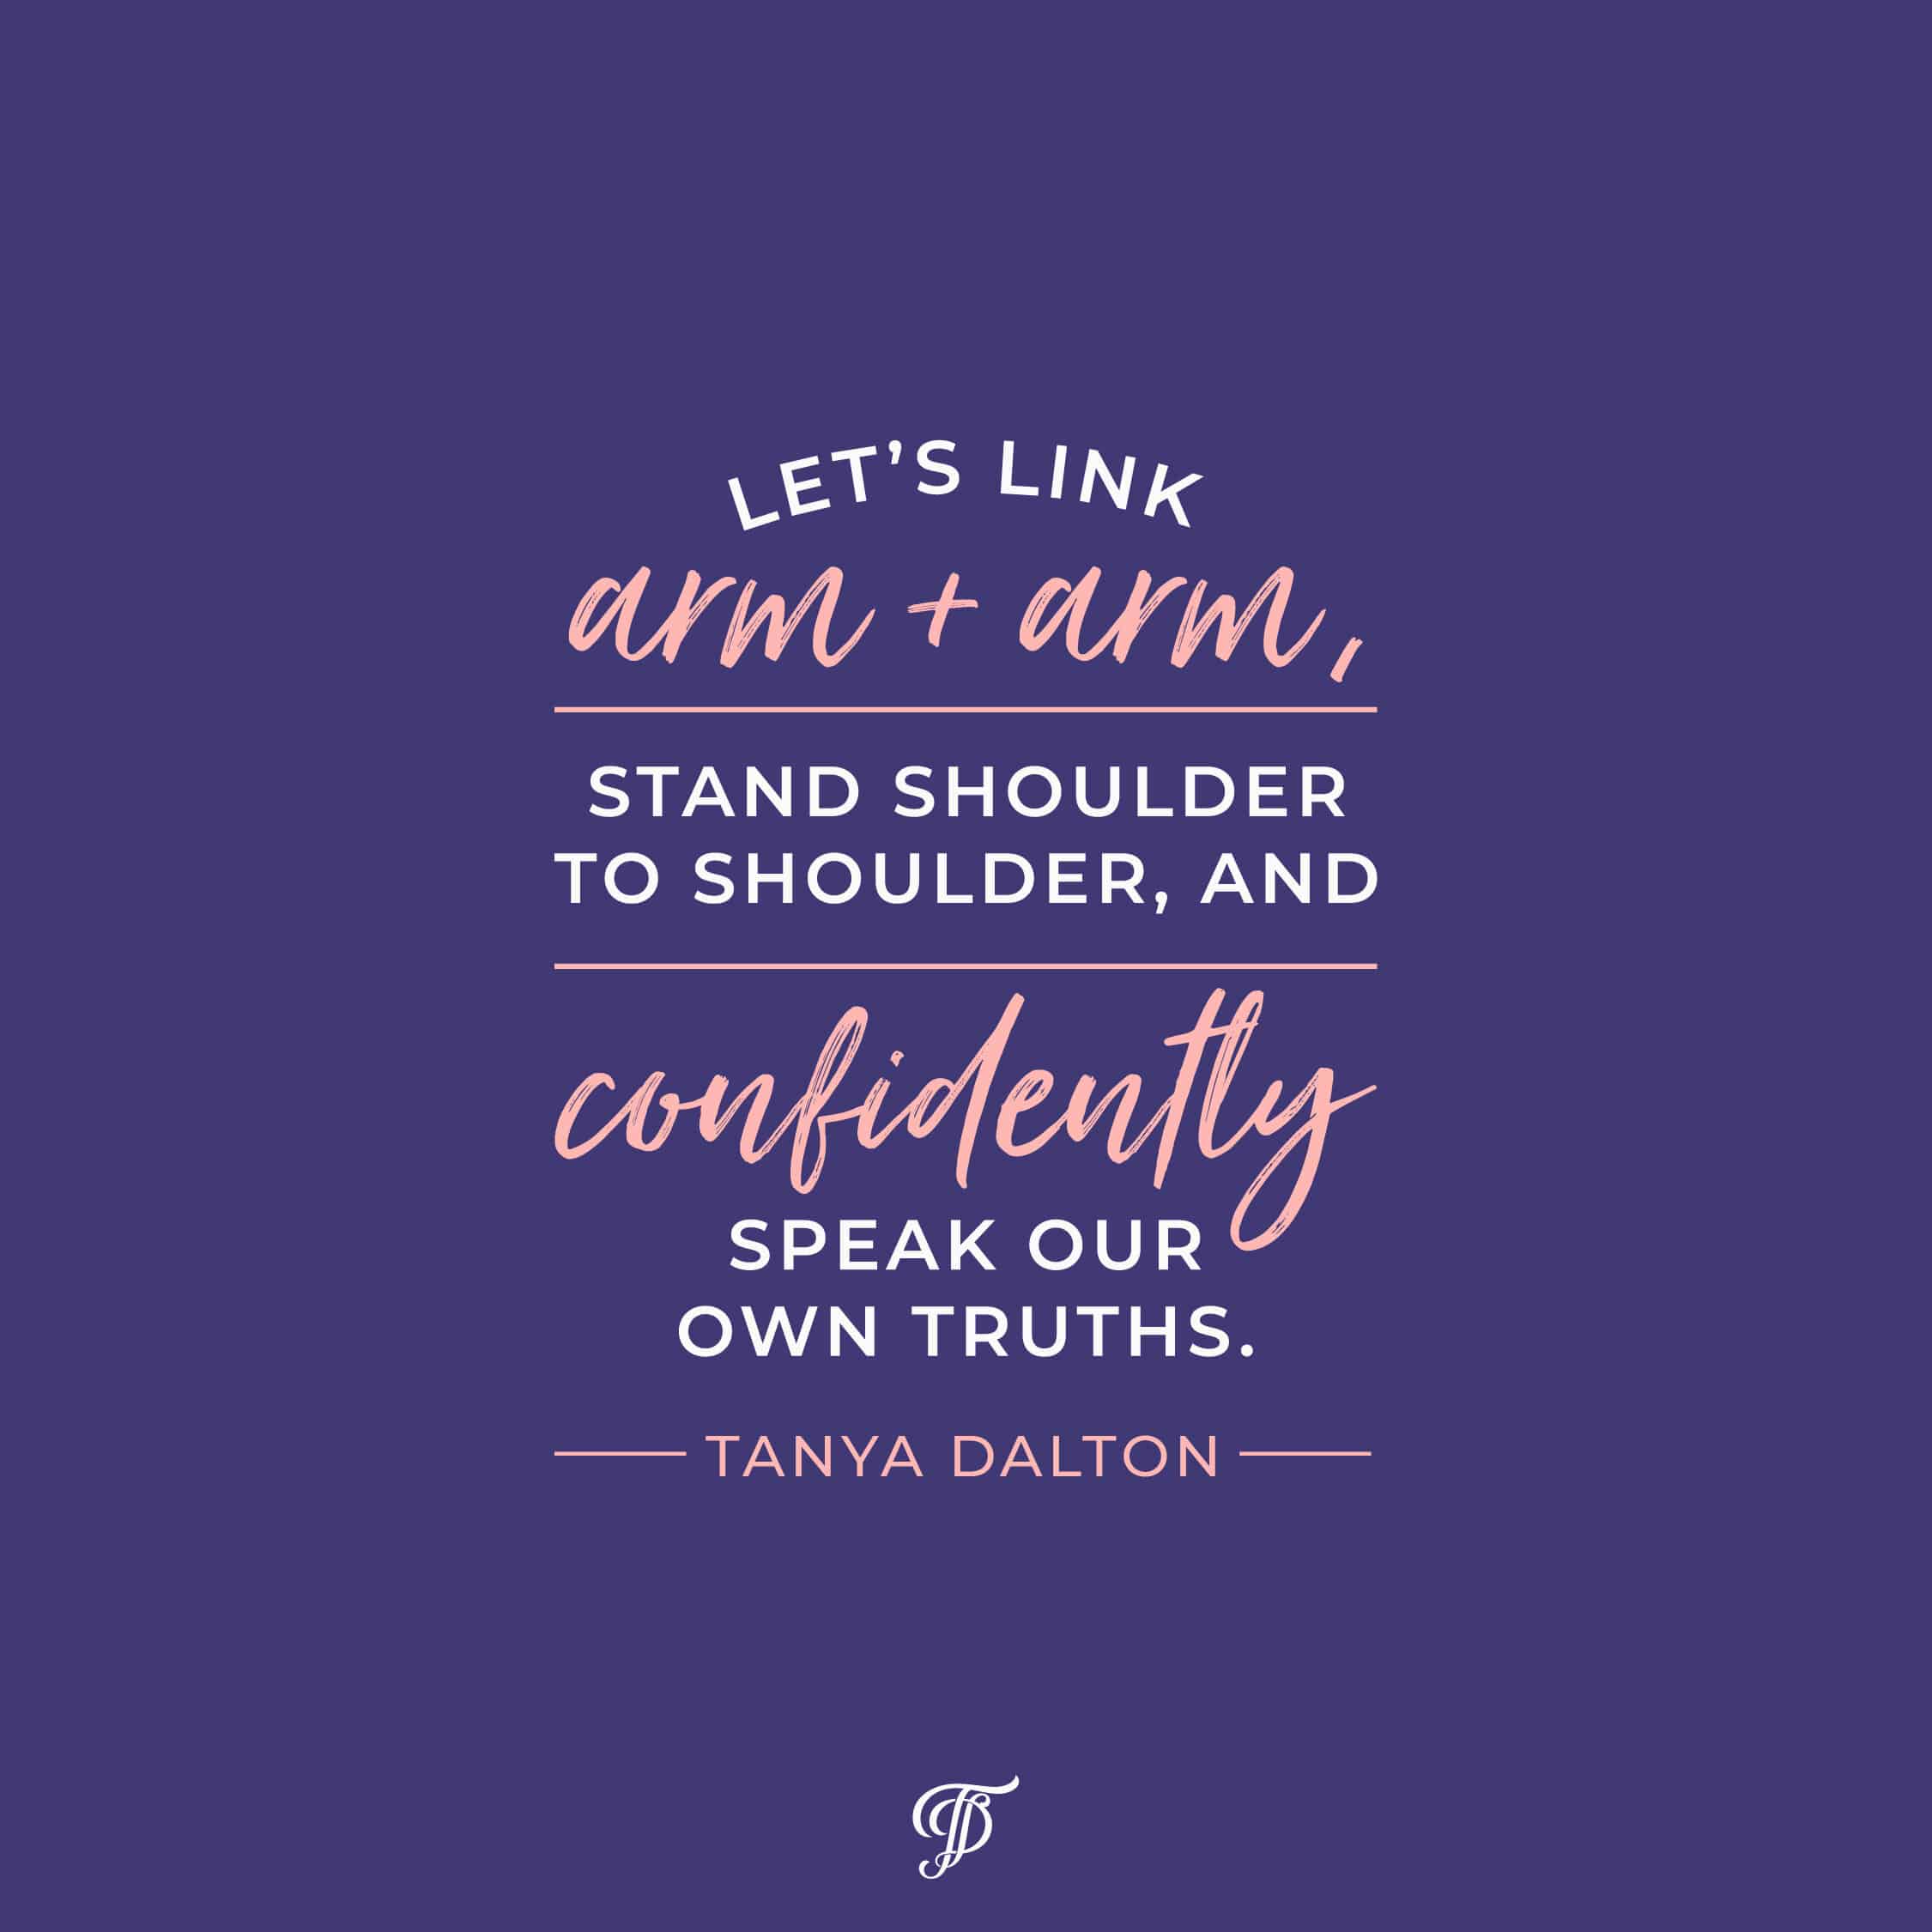 Tanya Dalton quote on women empowerment